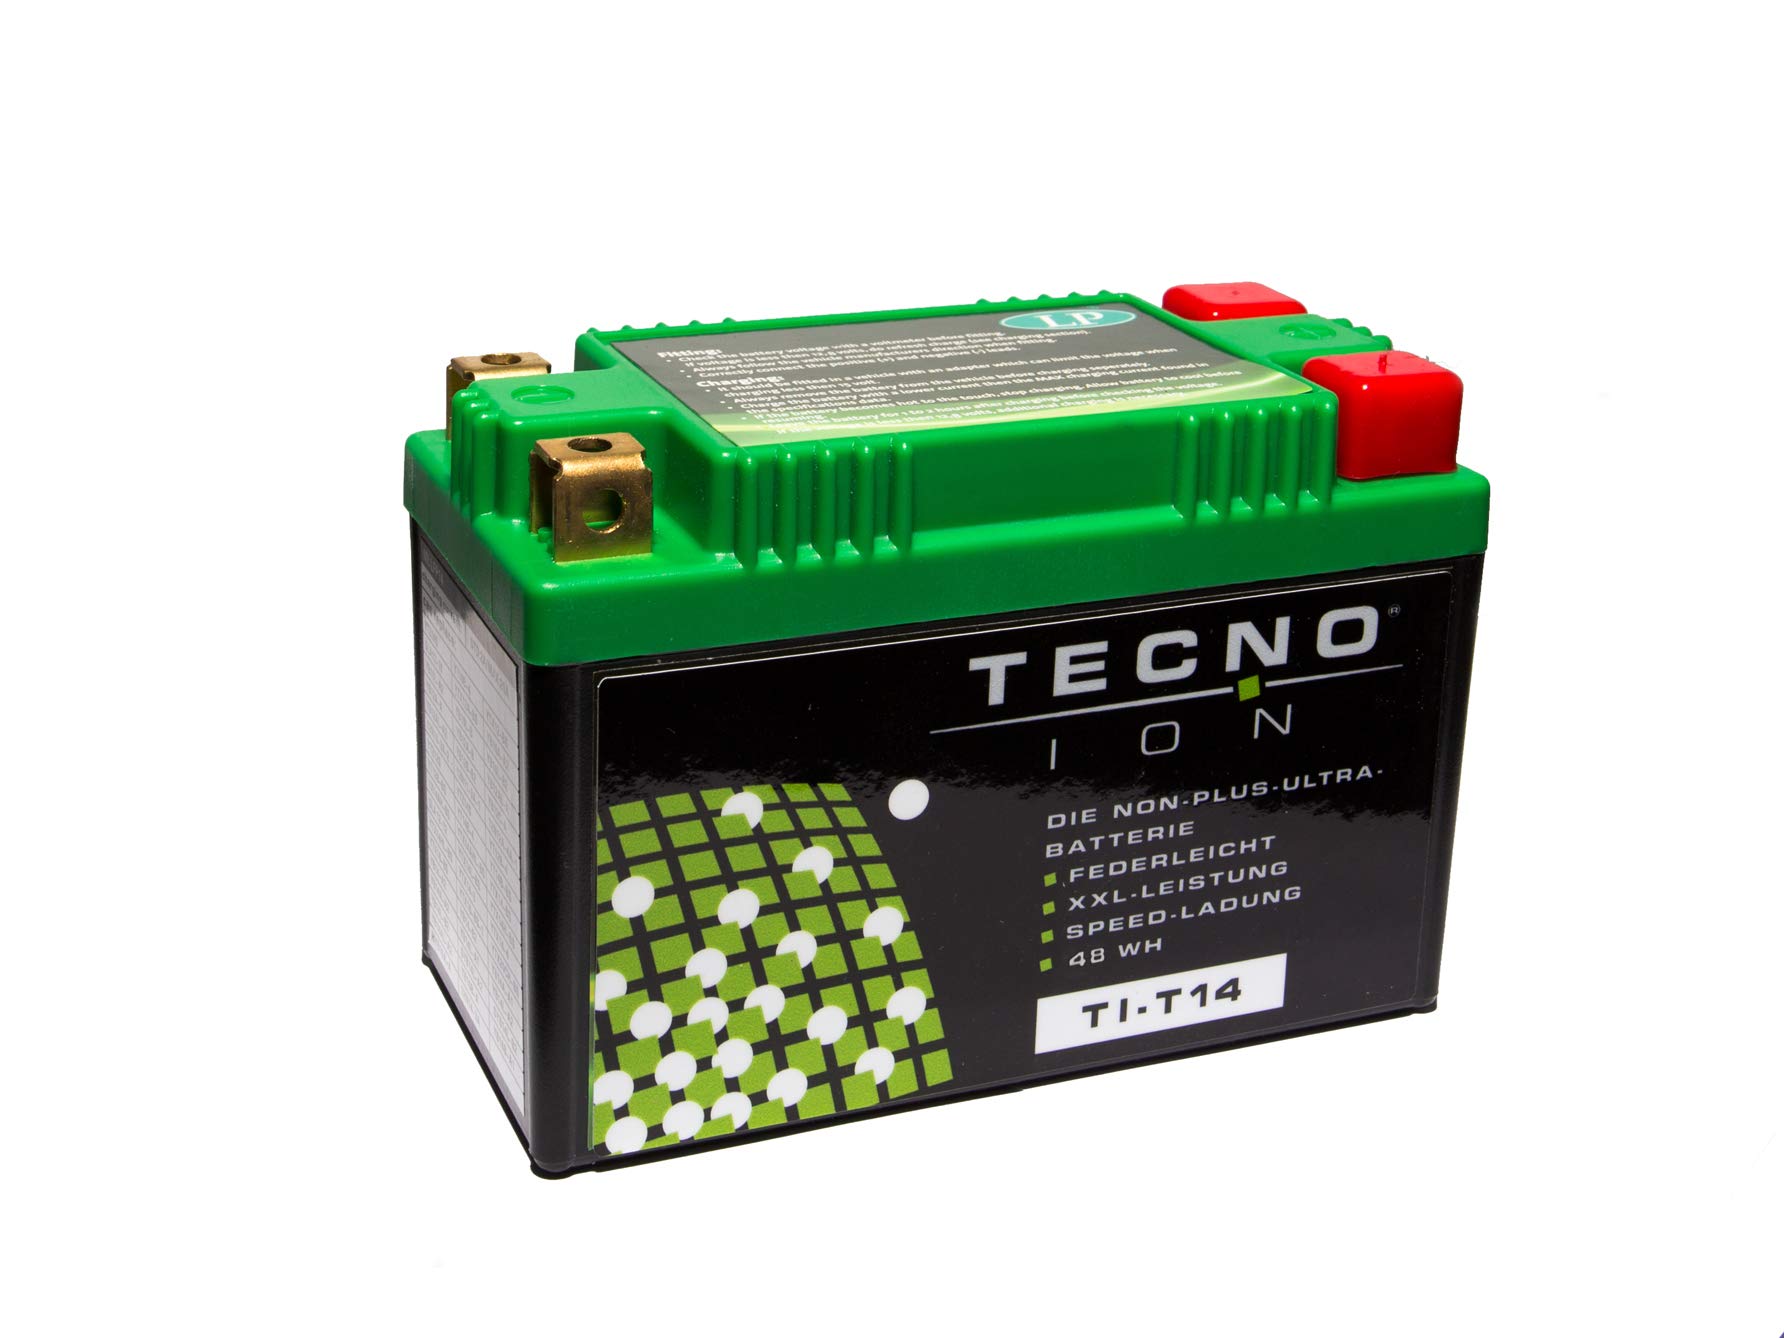 TECNO-ION Motorrad-Batterie TI-T14 Quadpol, 12V Lithium-Ionen-Batterie 48Wh, 134x65x92 mm inkl. Pfand von Wirth-Federn